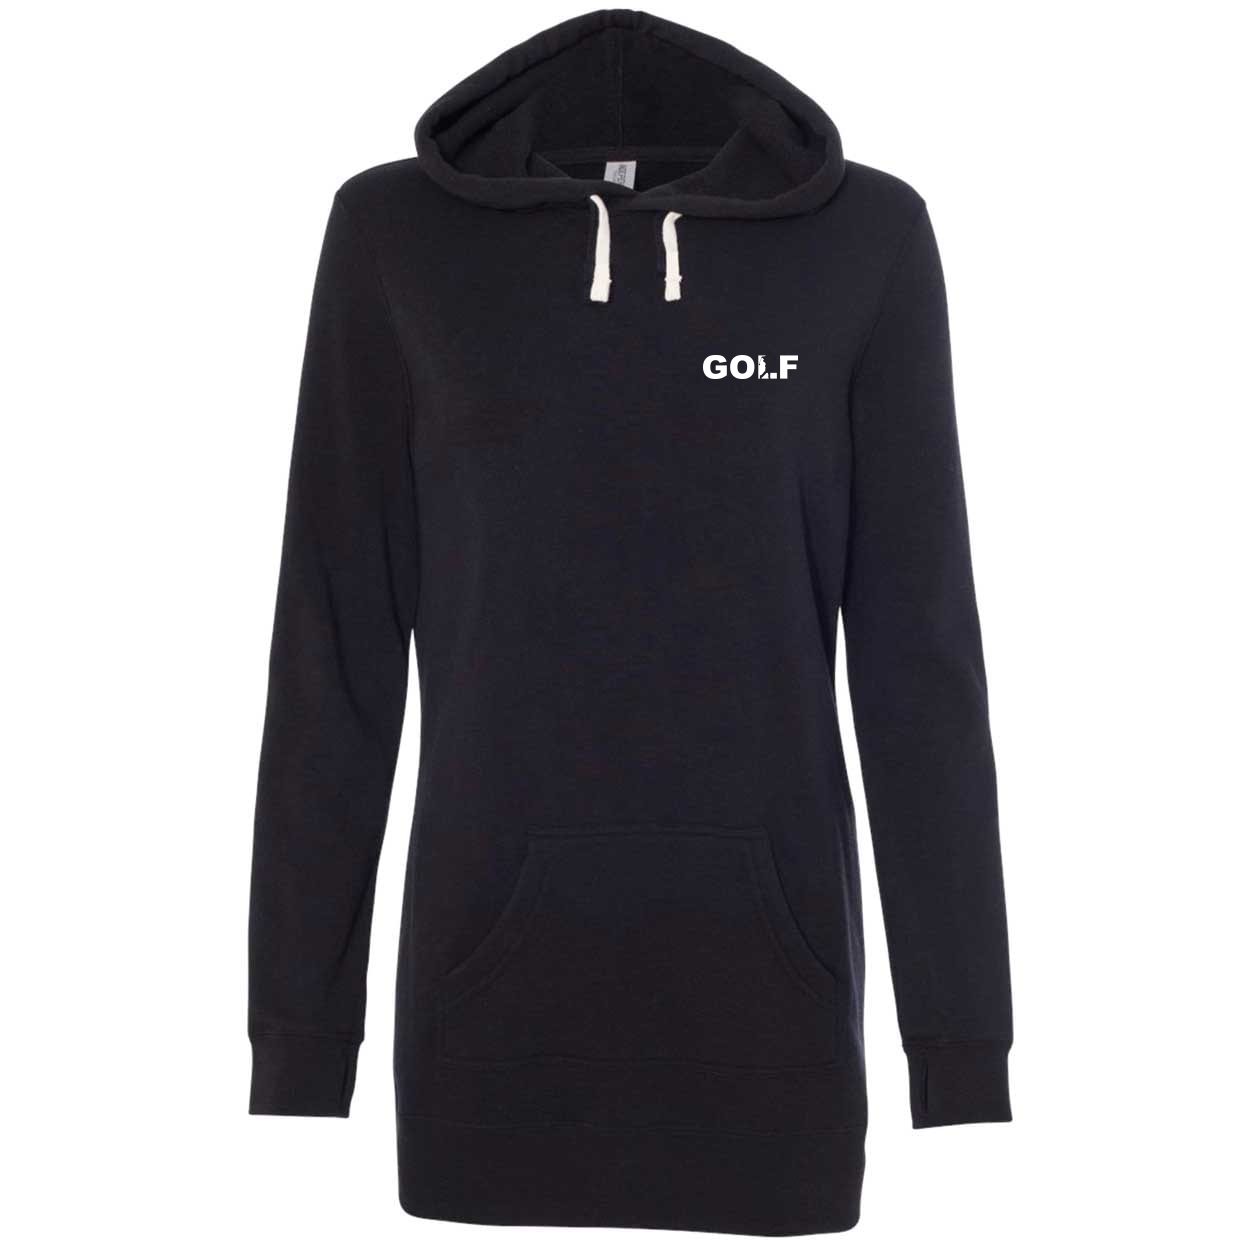 Golf Swing Logo Night Out Womens Pullover Hooded Sweatshirt Dress Black